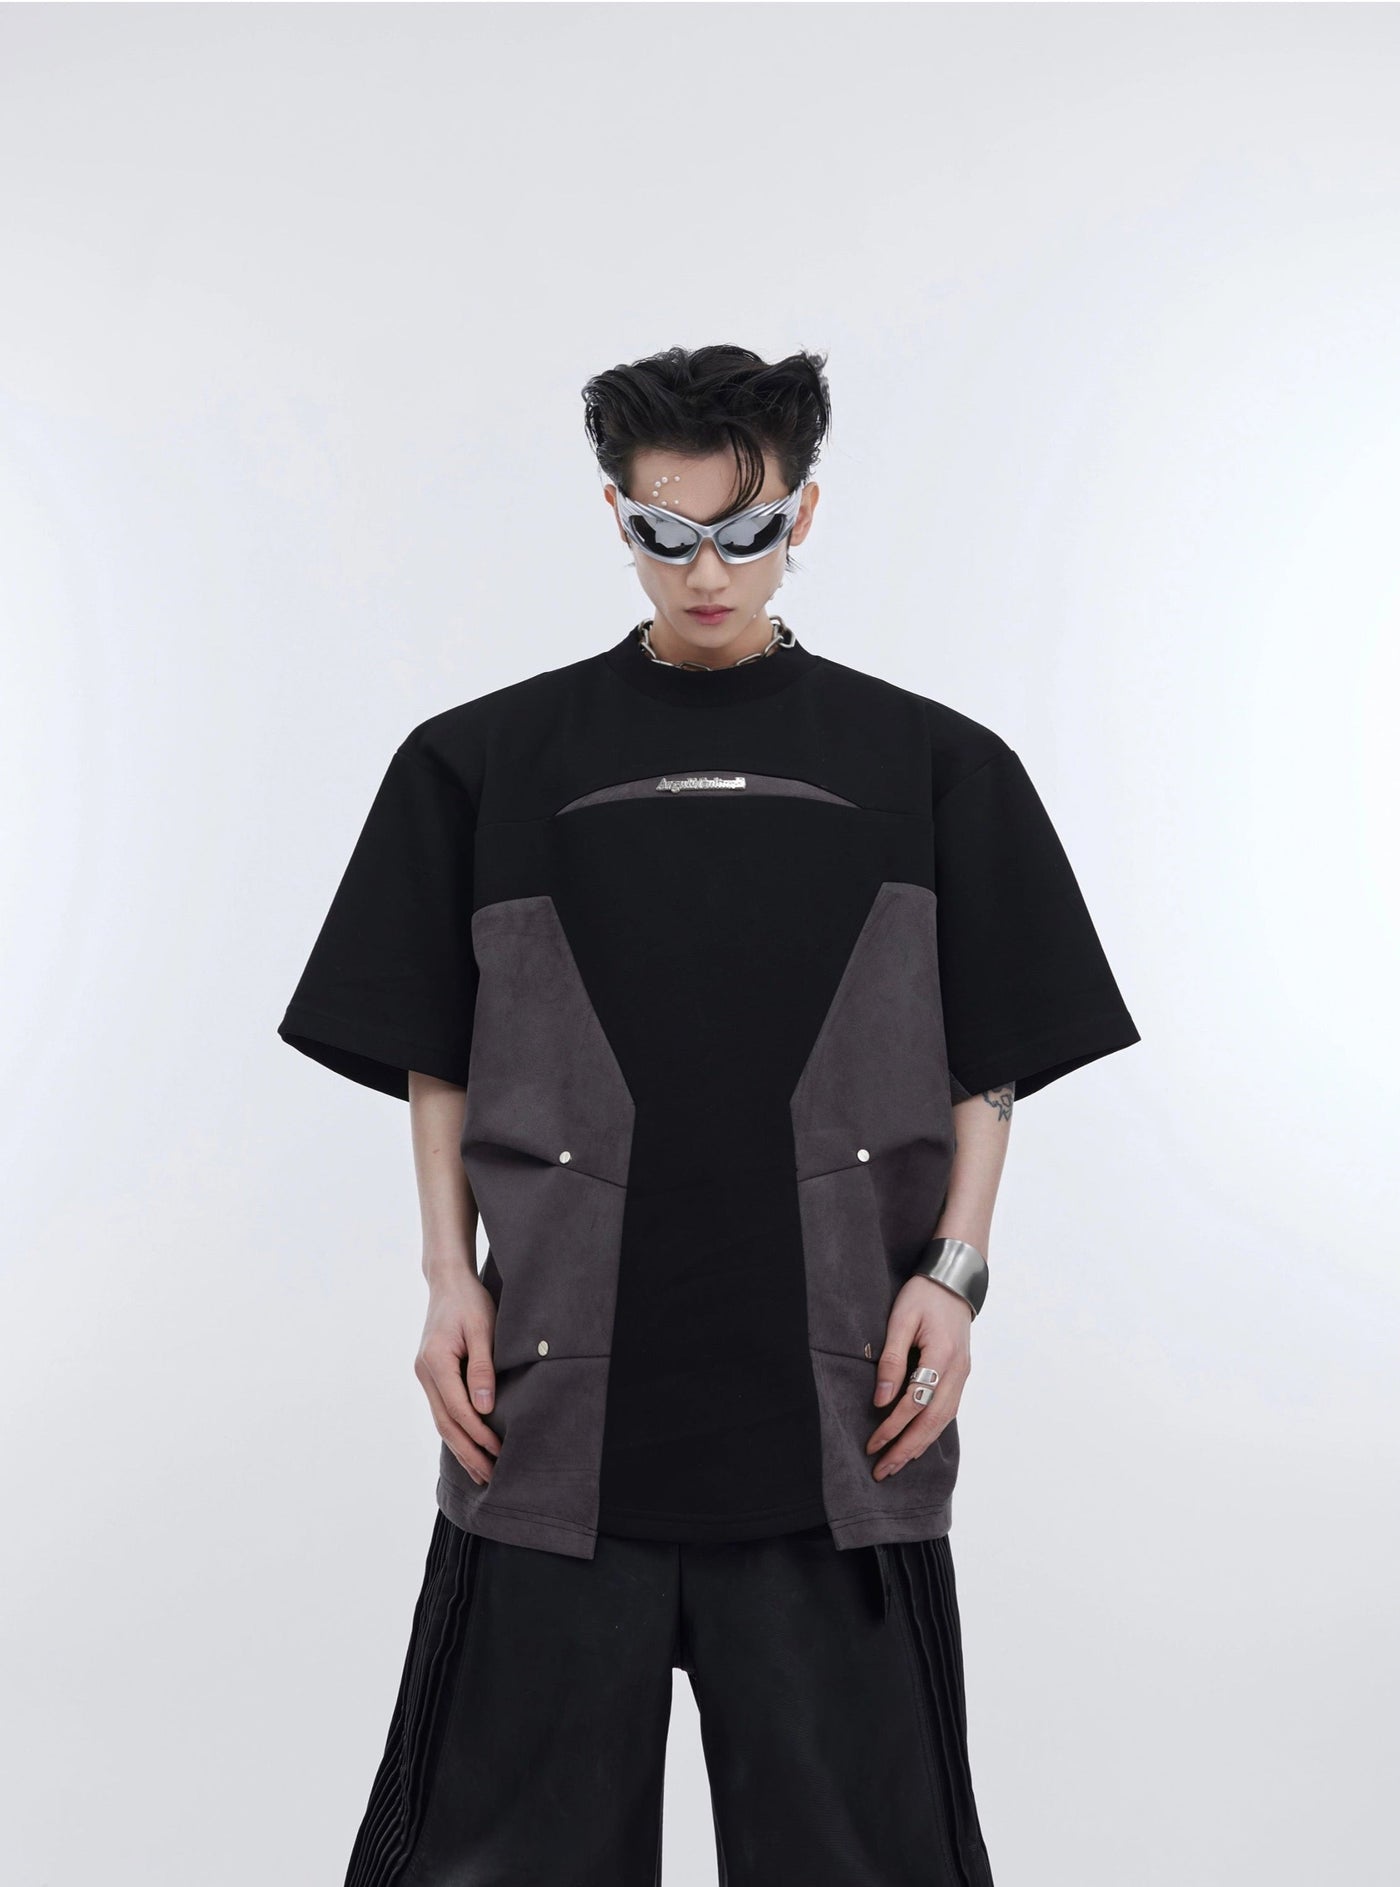 Leather Splice Detail T-Shirt Korean Street Fashion T-Shirt By Argue Culture Shop Online at OH Vault